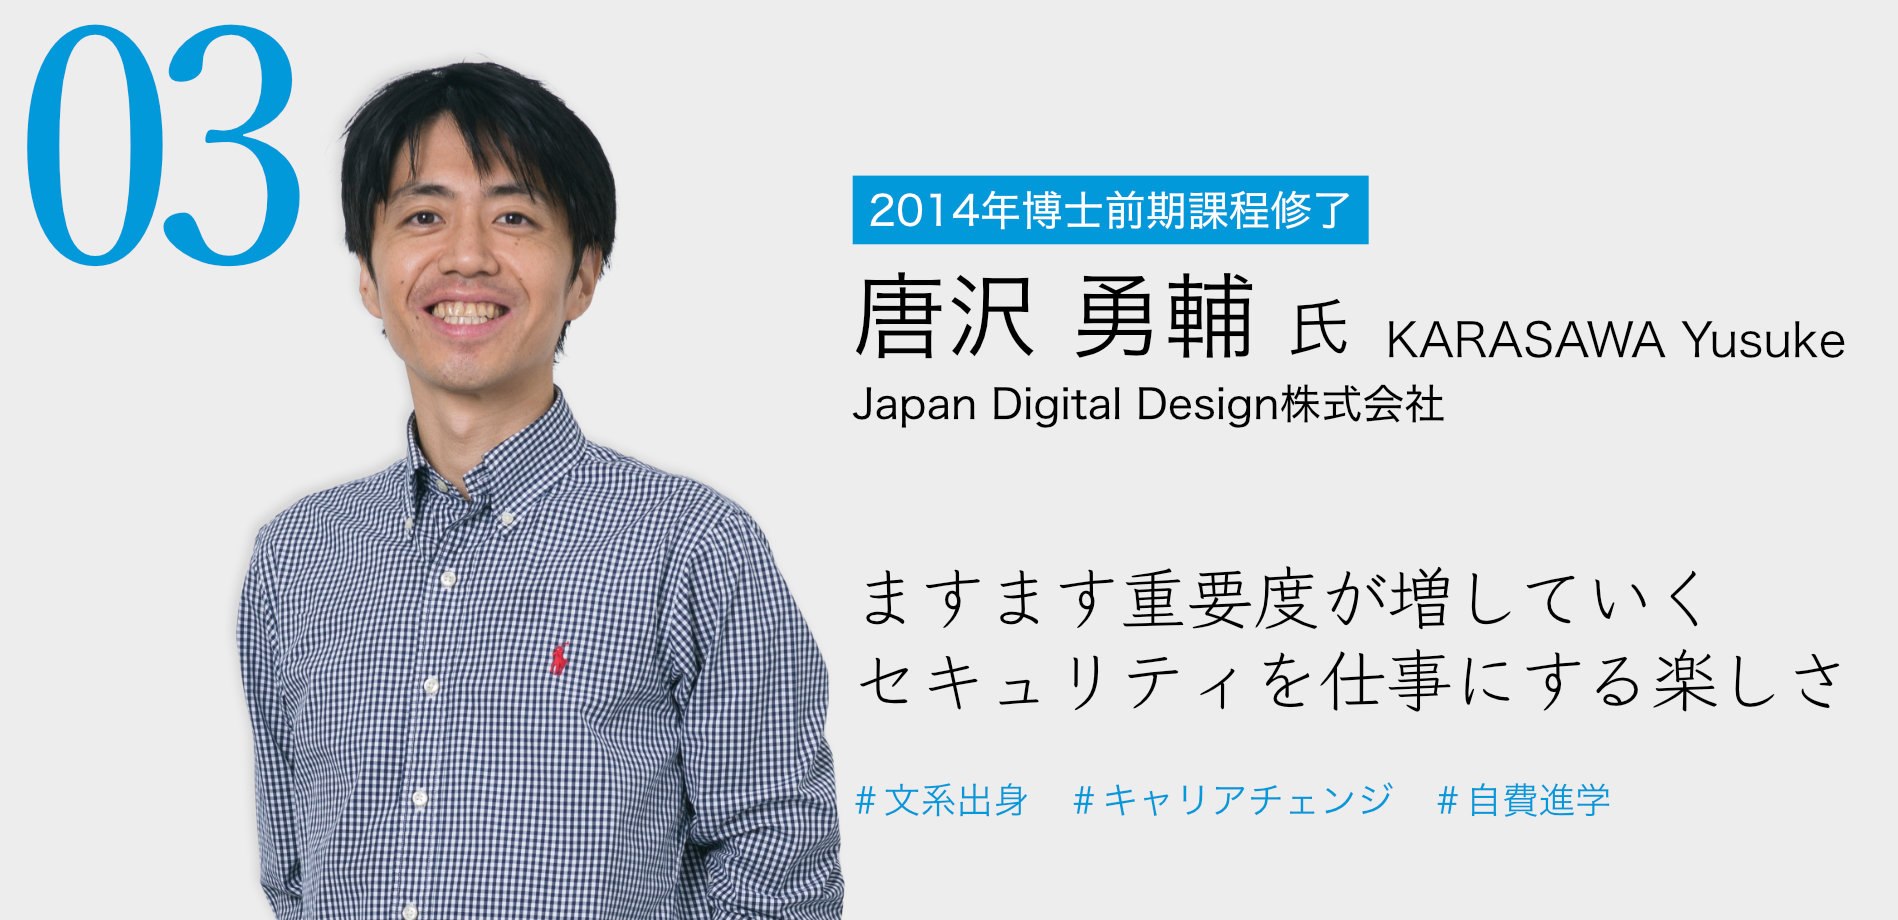 03  E  / Japan Digital Design u܂܂dvxĂZLeBdɂyv